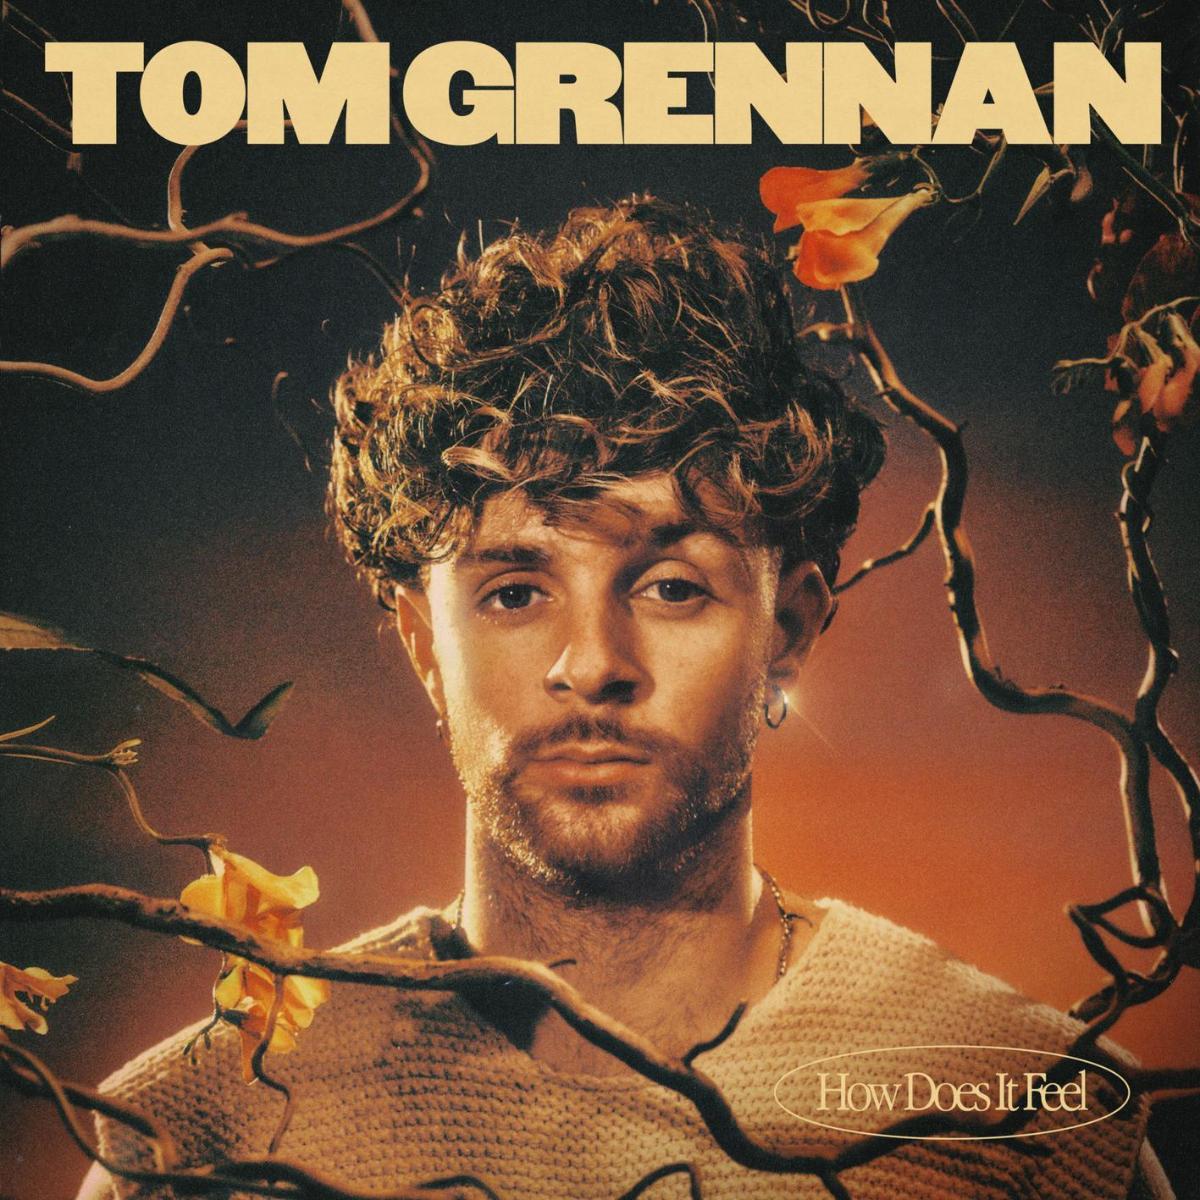 Tom Grennan
‘How Does It Feel’
